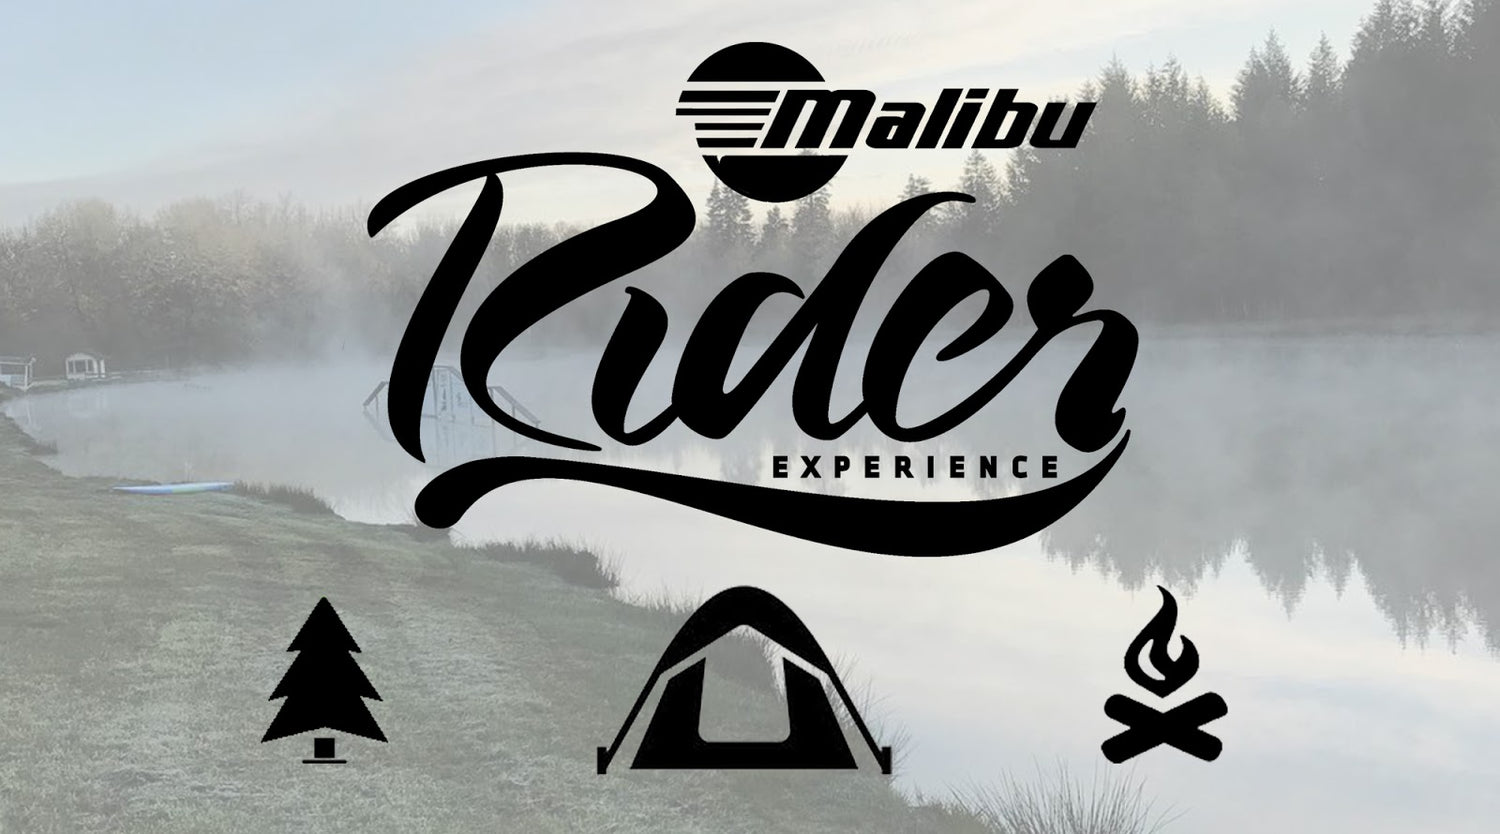 Malibu Rider Experience